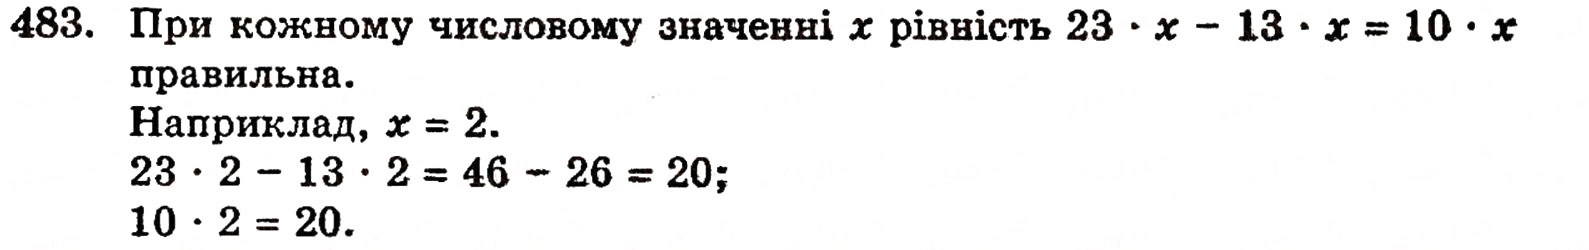 Завдання № 483 - § 10. Закони множення - ГДЗ Математика 5 клас Г.П. Бевз, В.Г. Бевз 2005